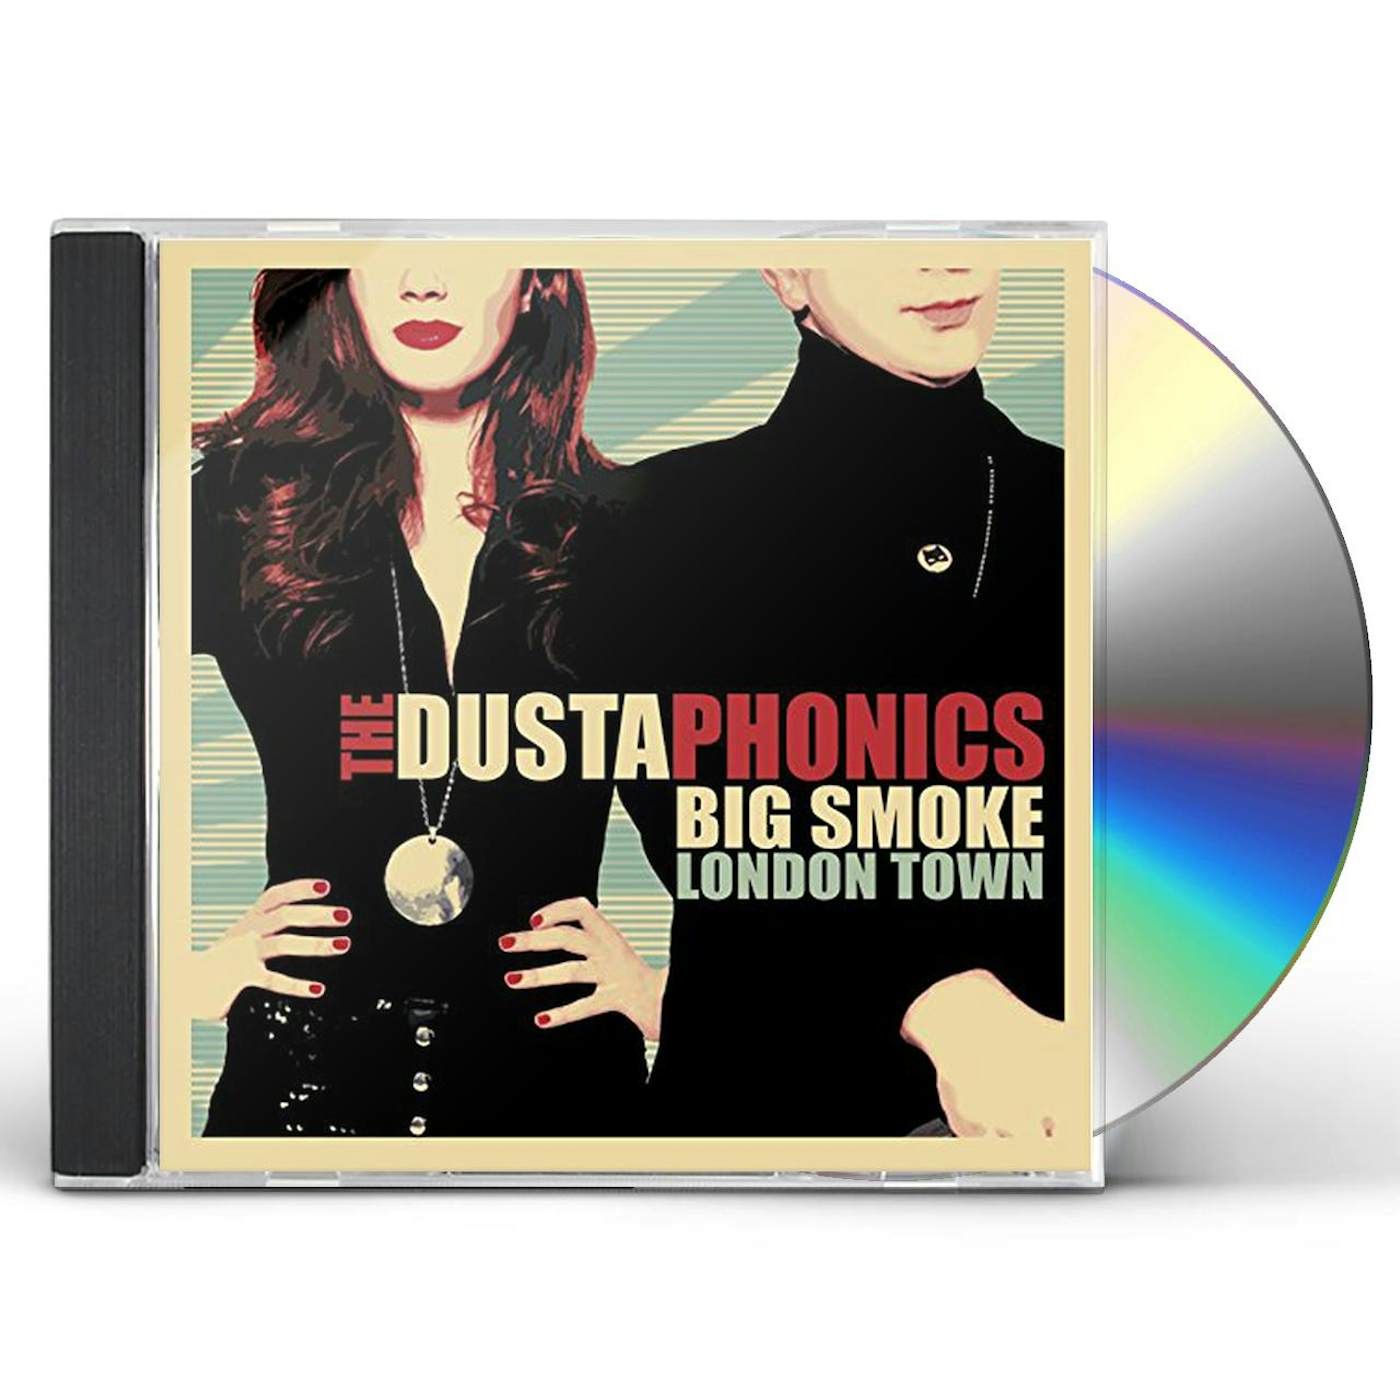 The Dustaphonics BIG SMOKE LONDON TOWN CD